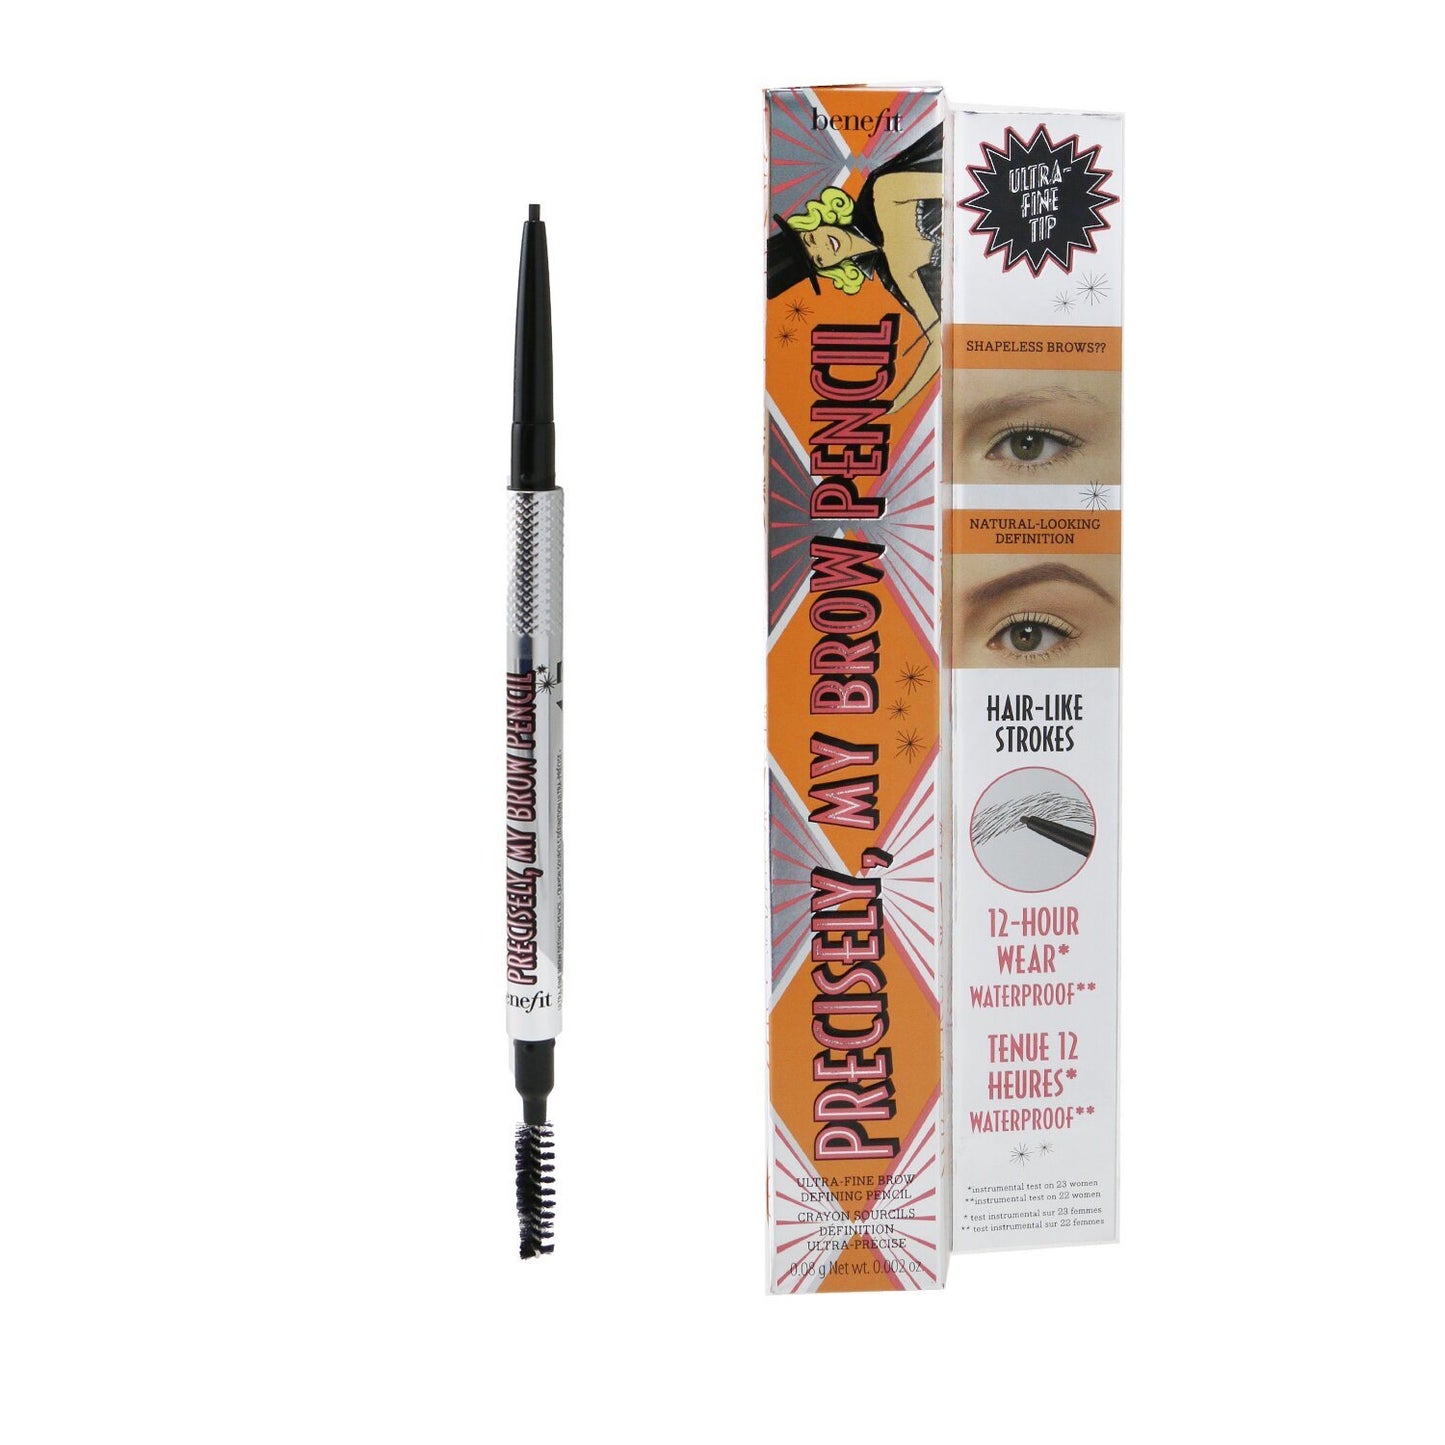 BENEFIT - Precisely My Brow Pencil (Ultra Fine Brow Defining Pencil) - # 4.5 (Neutral Deep Brown) BM94 / 095060 0.08g/0.002oz